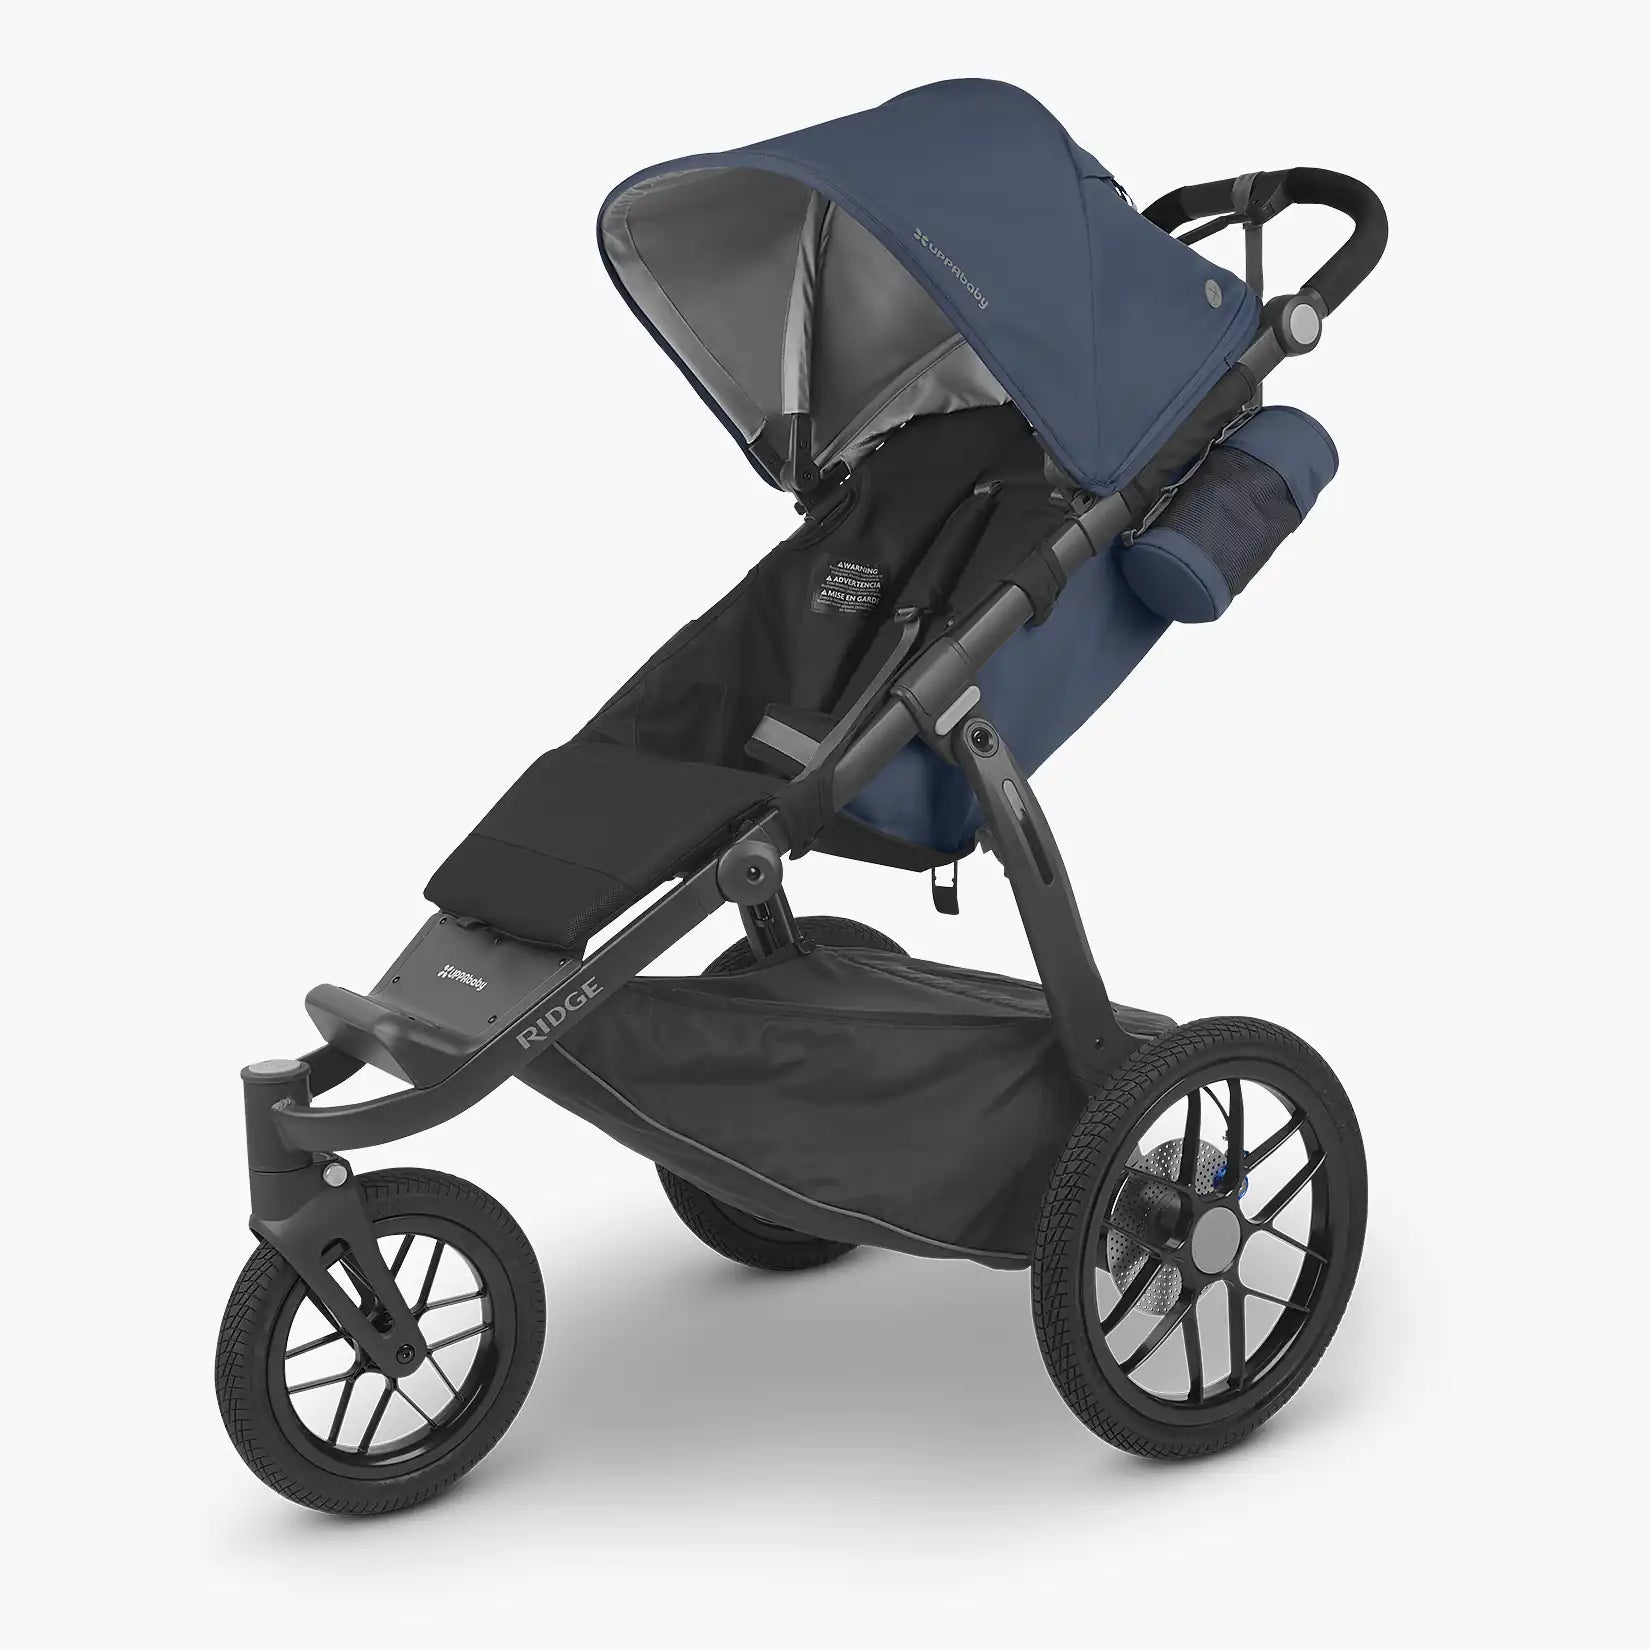 UPPAbaby Ridge Stroller - ANB Baby -810030098577$500 - $1000